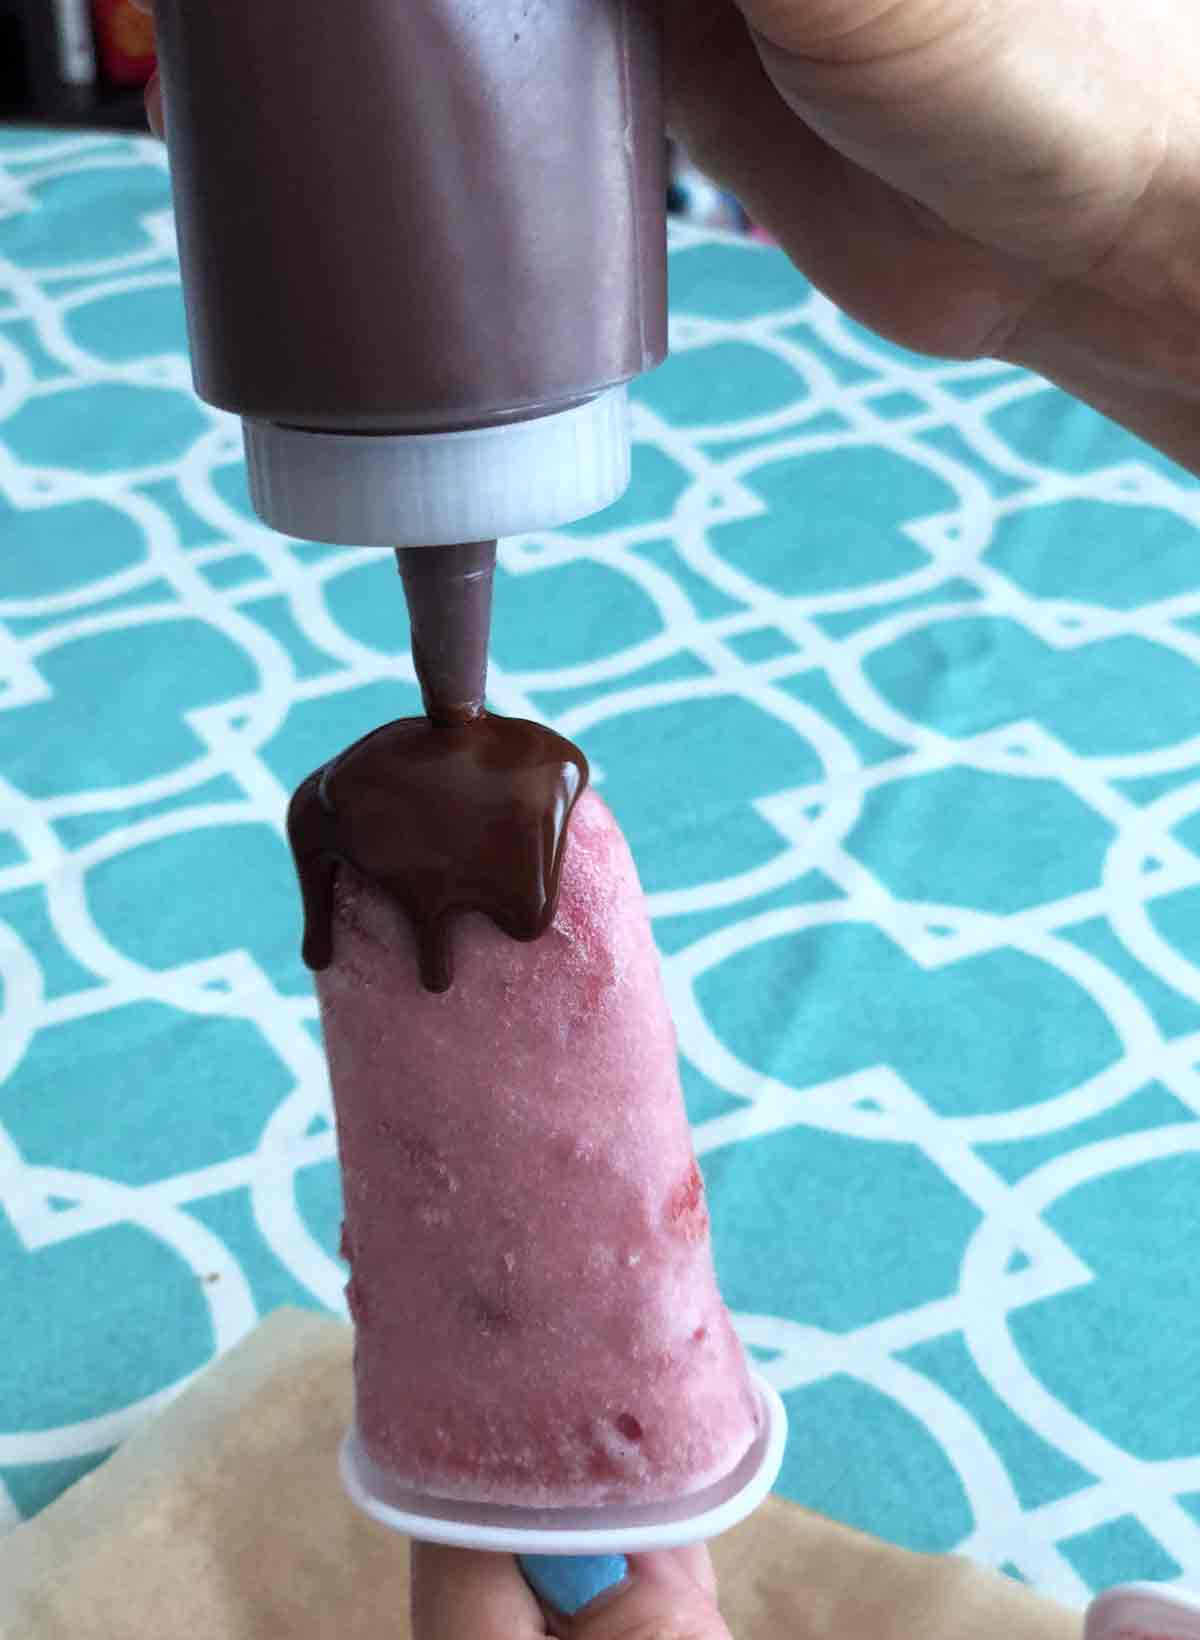 adding penguin coat to some of the vegan strawberry ice cream popsicles